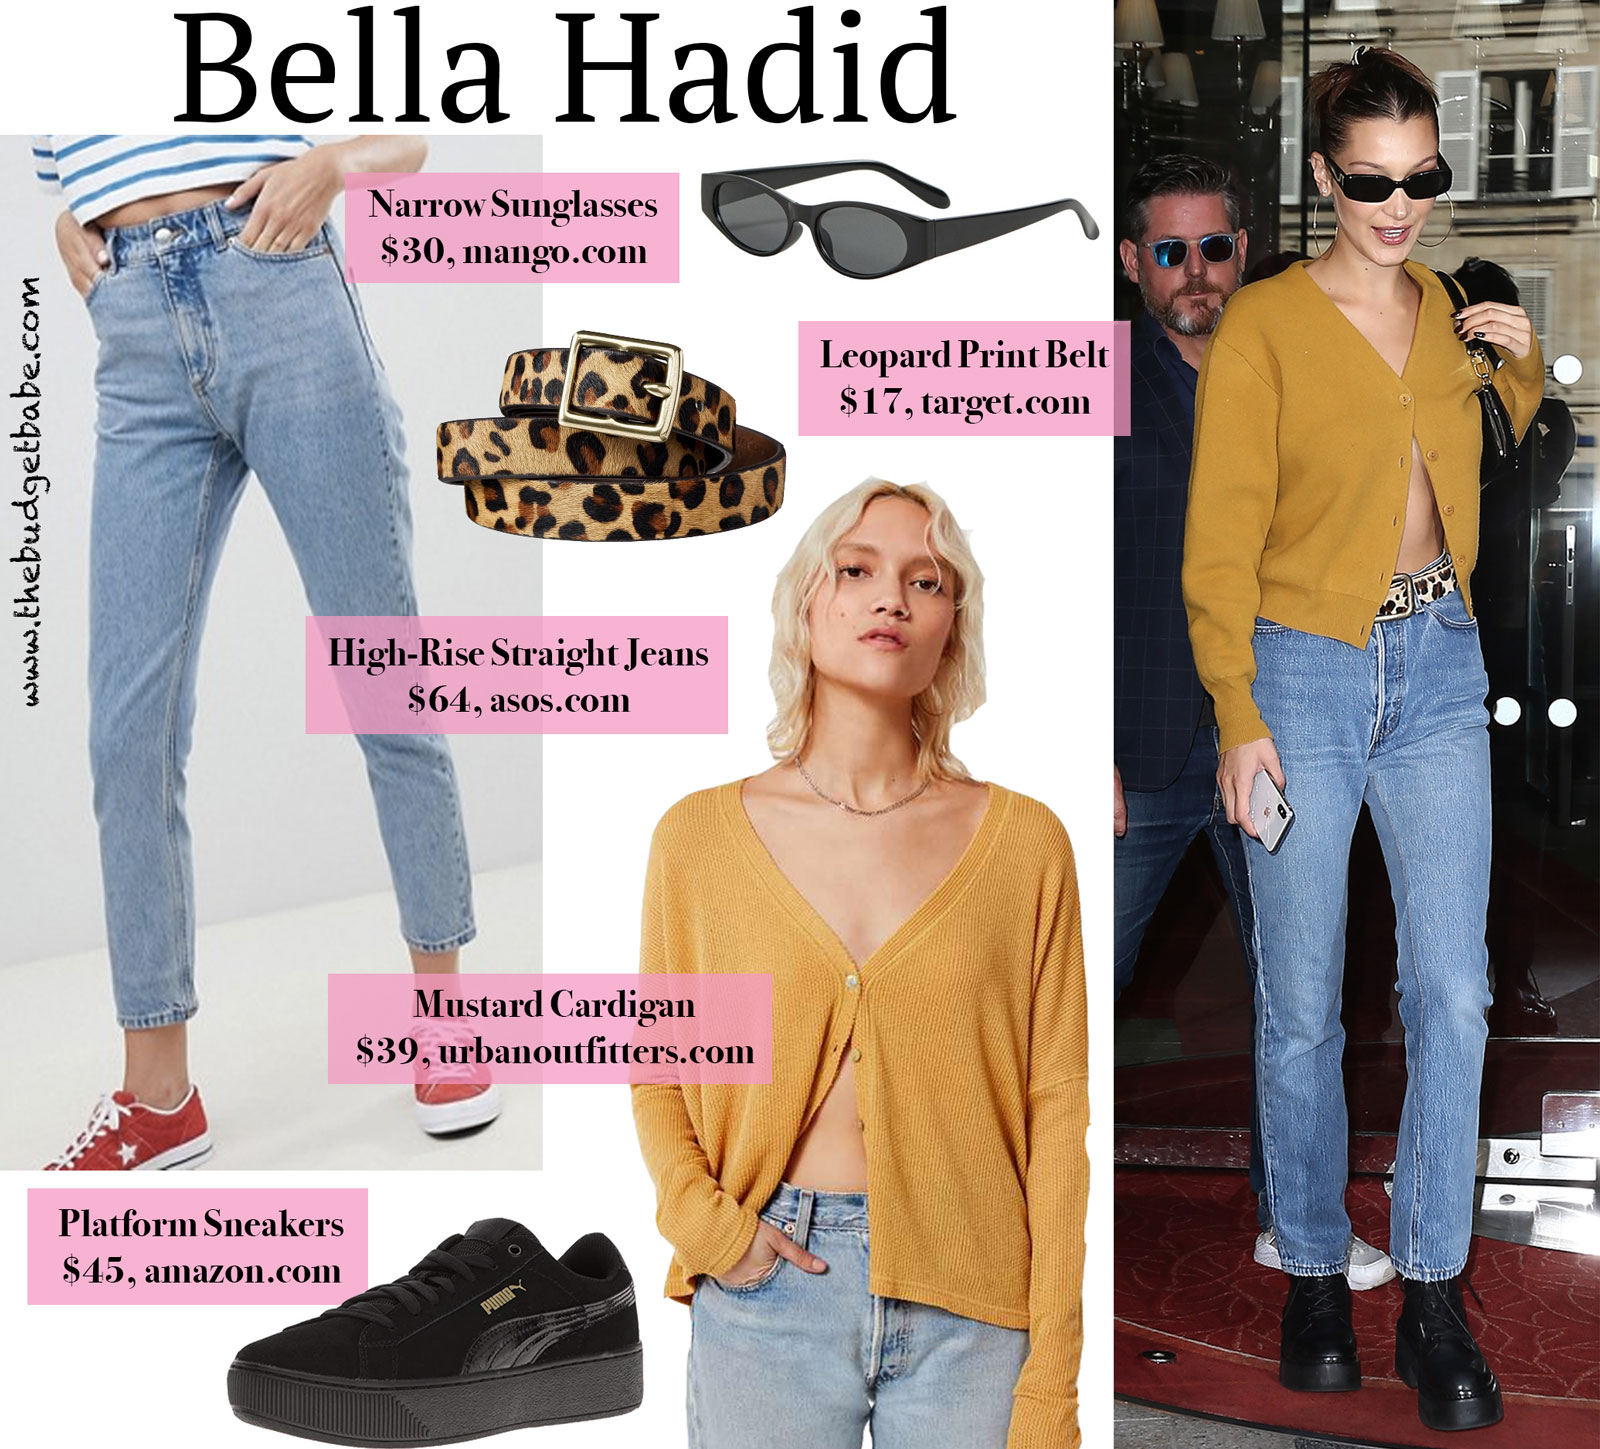 Bella Hadid Mustard Cardigan and Leopard Belt Look for Less